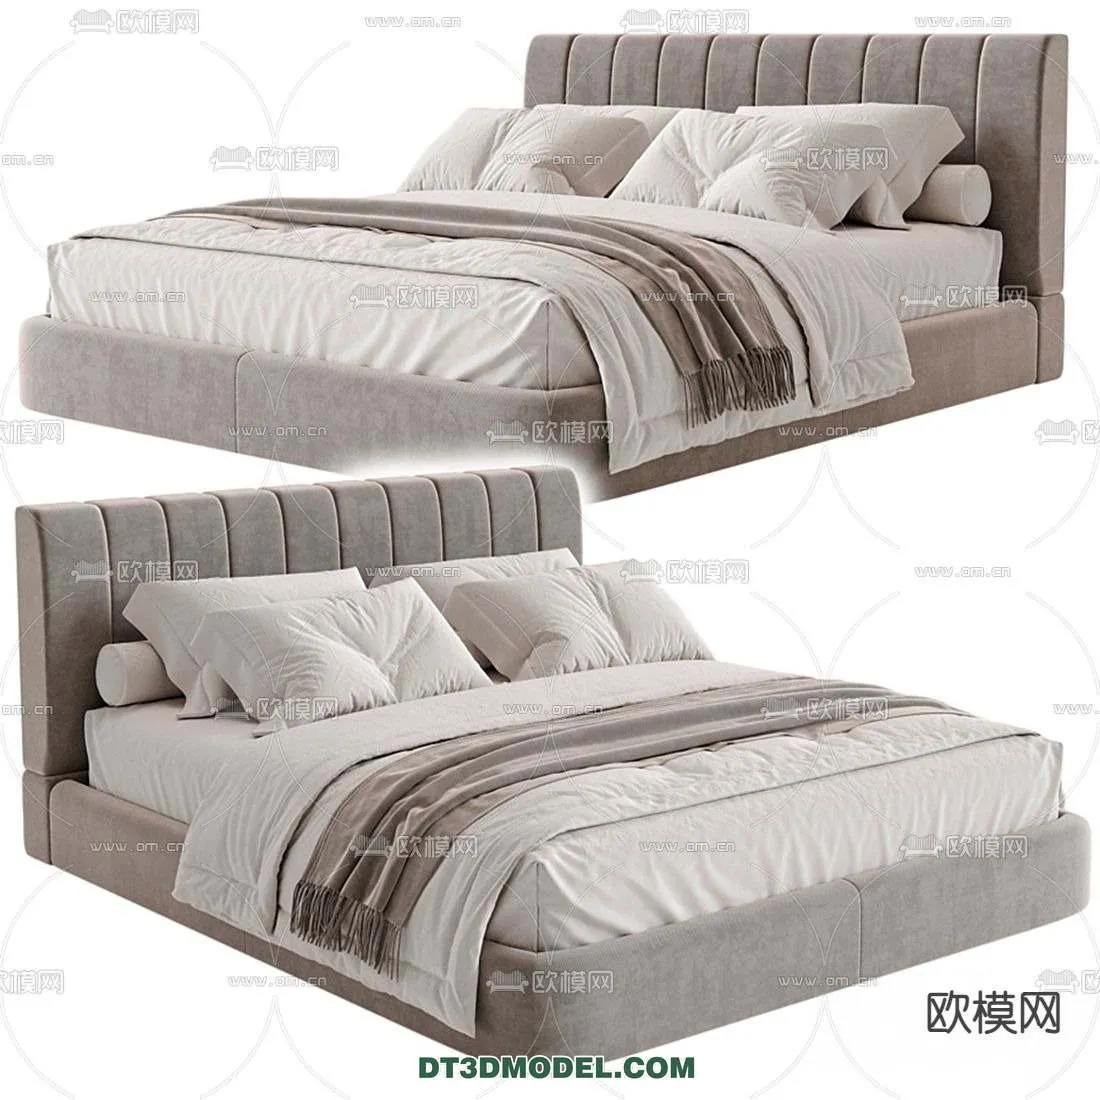 Double Bed 3D Models – 0047